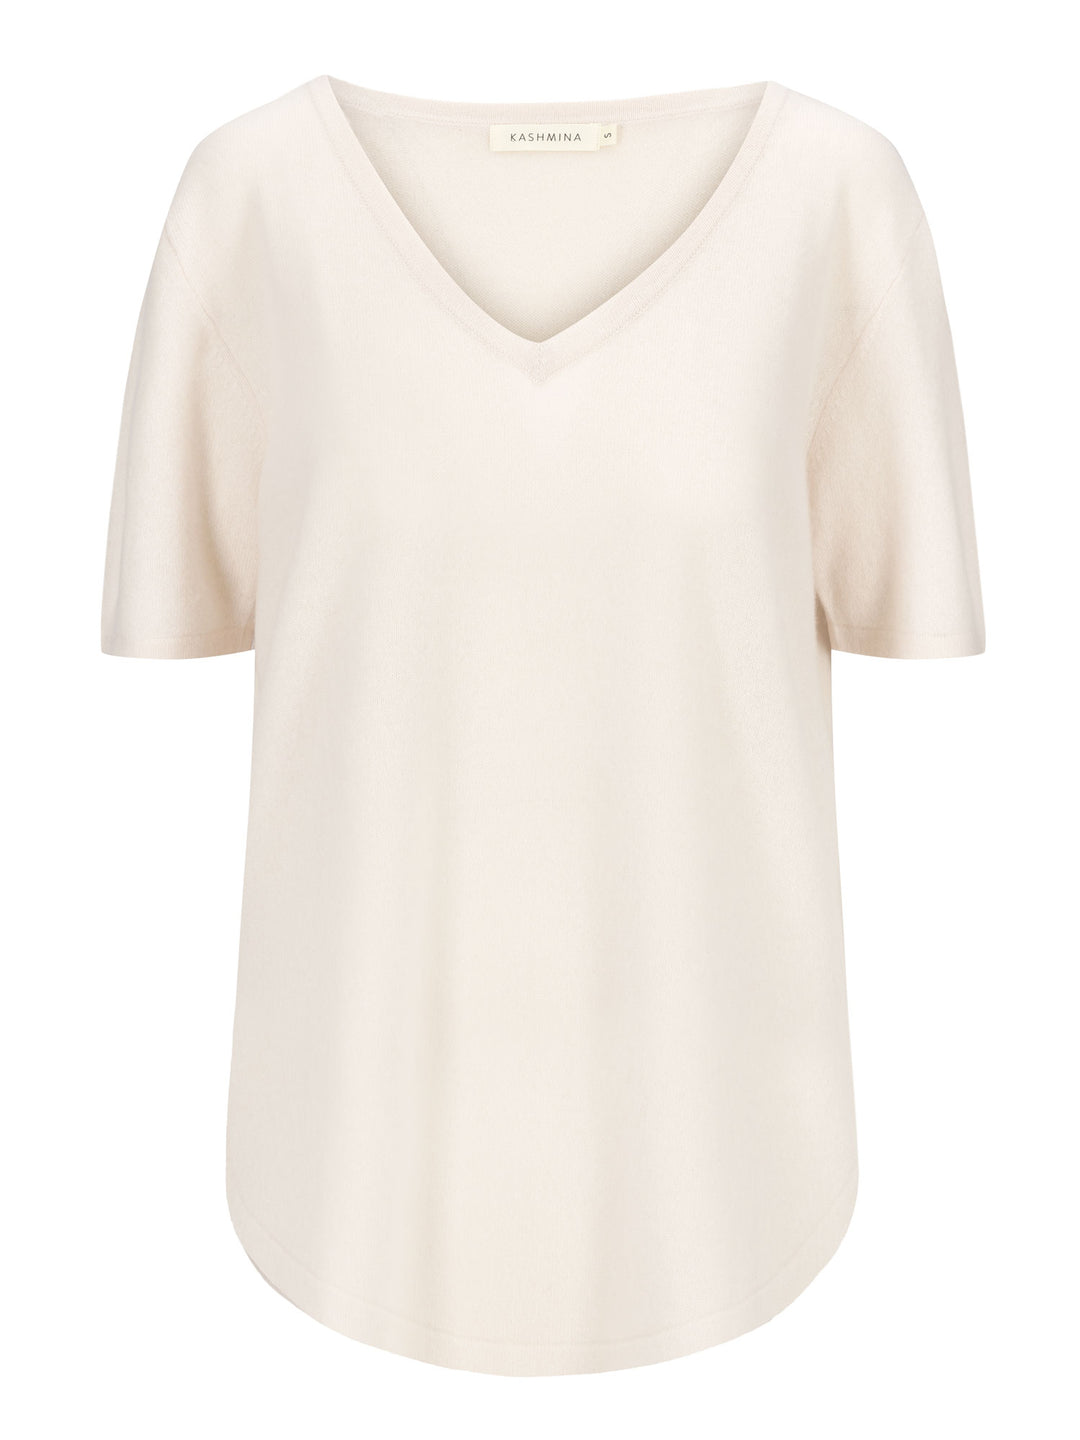 Cashmere T-shirt "Iben" 100% cashmere from Kashmina. Scandinavian design. Color pearl